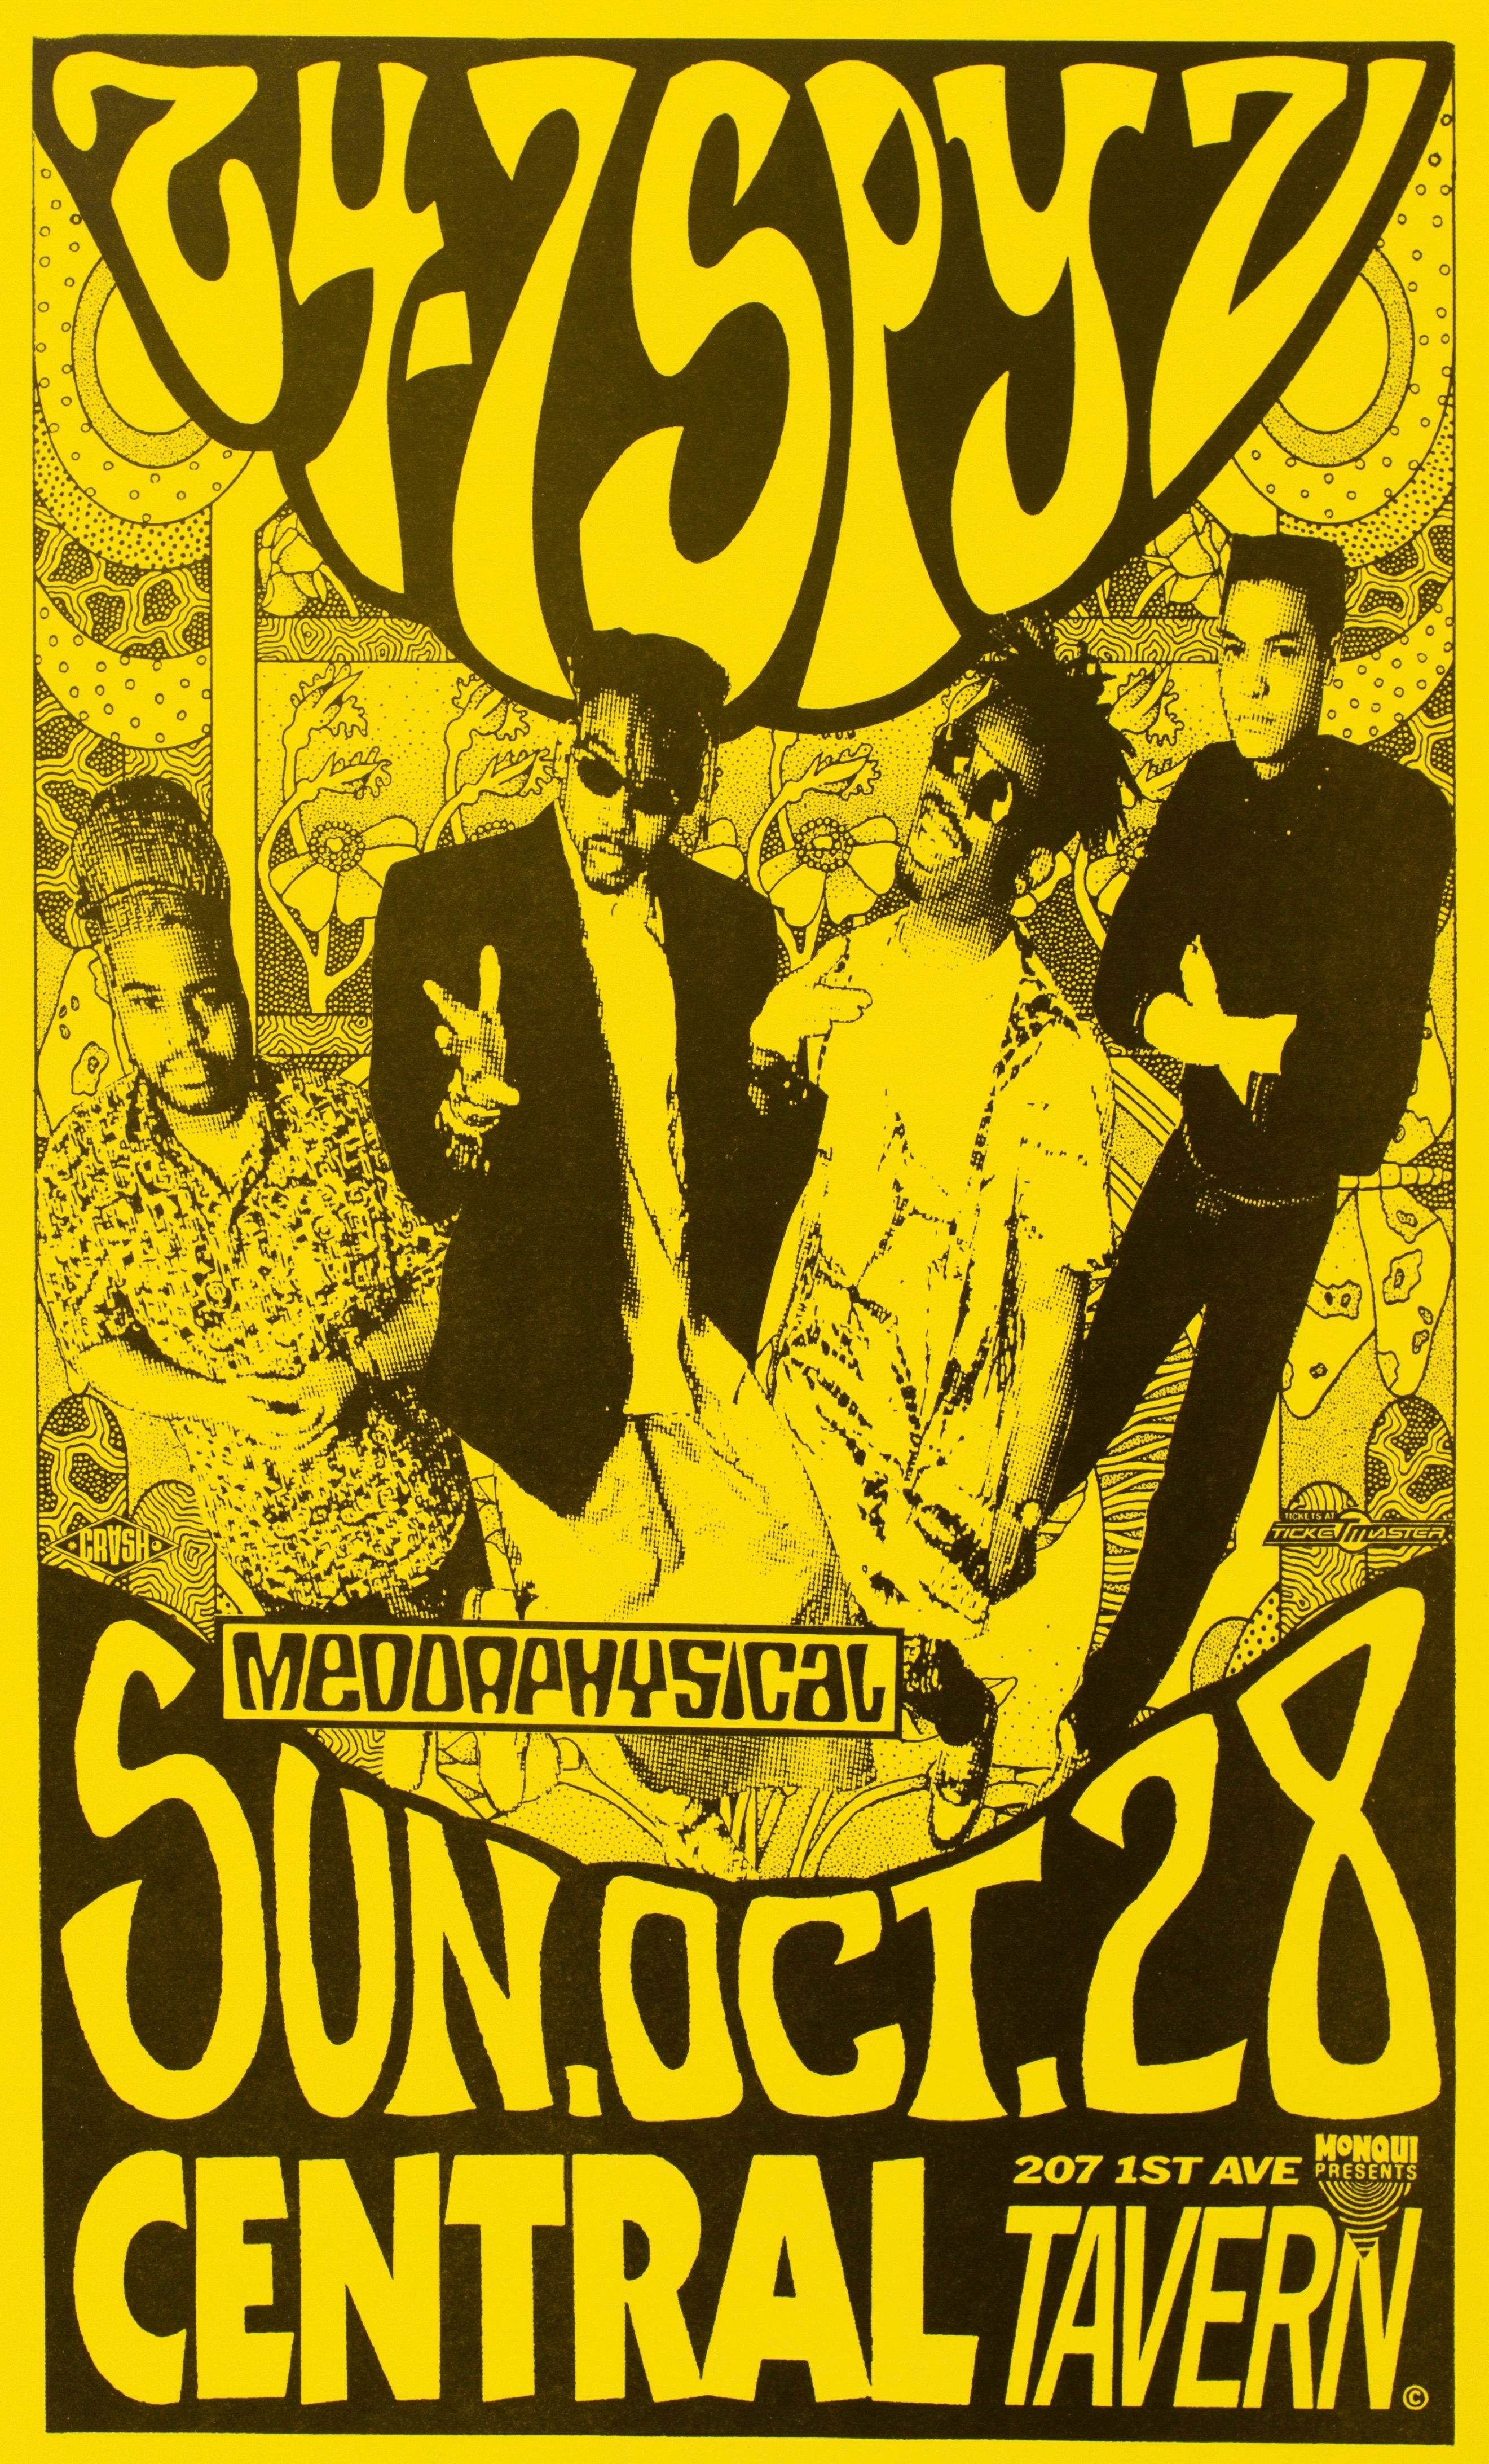 MXP-96.3 247 Spyz 1990 Central Tavern  Oct 28 Concert Poster